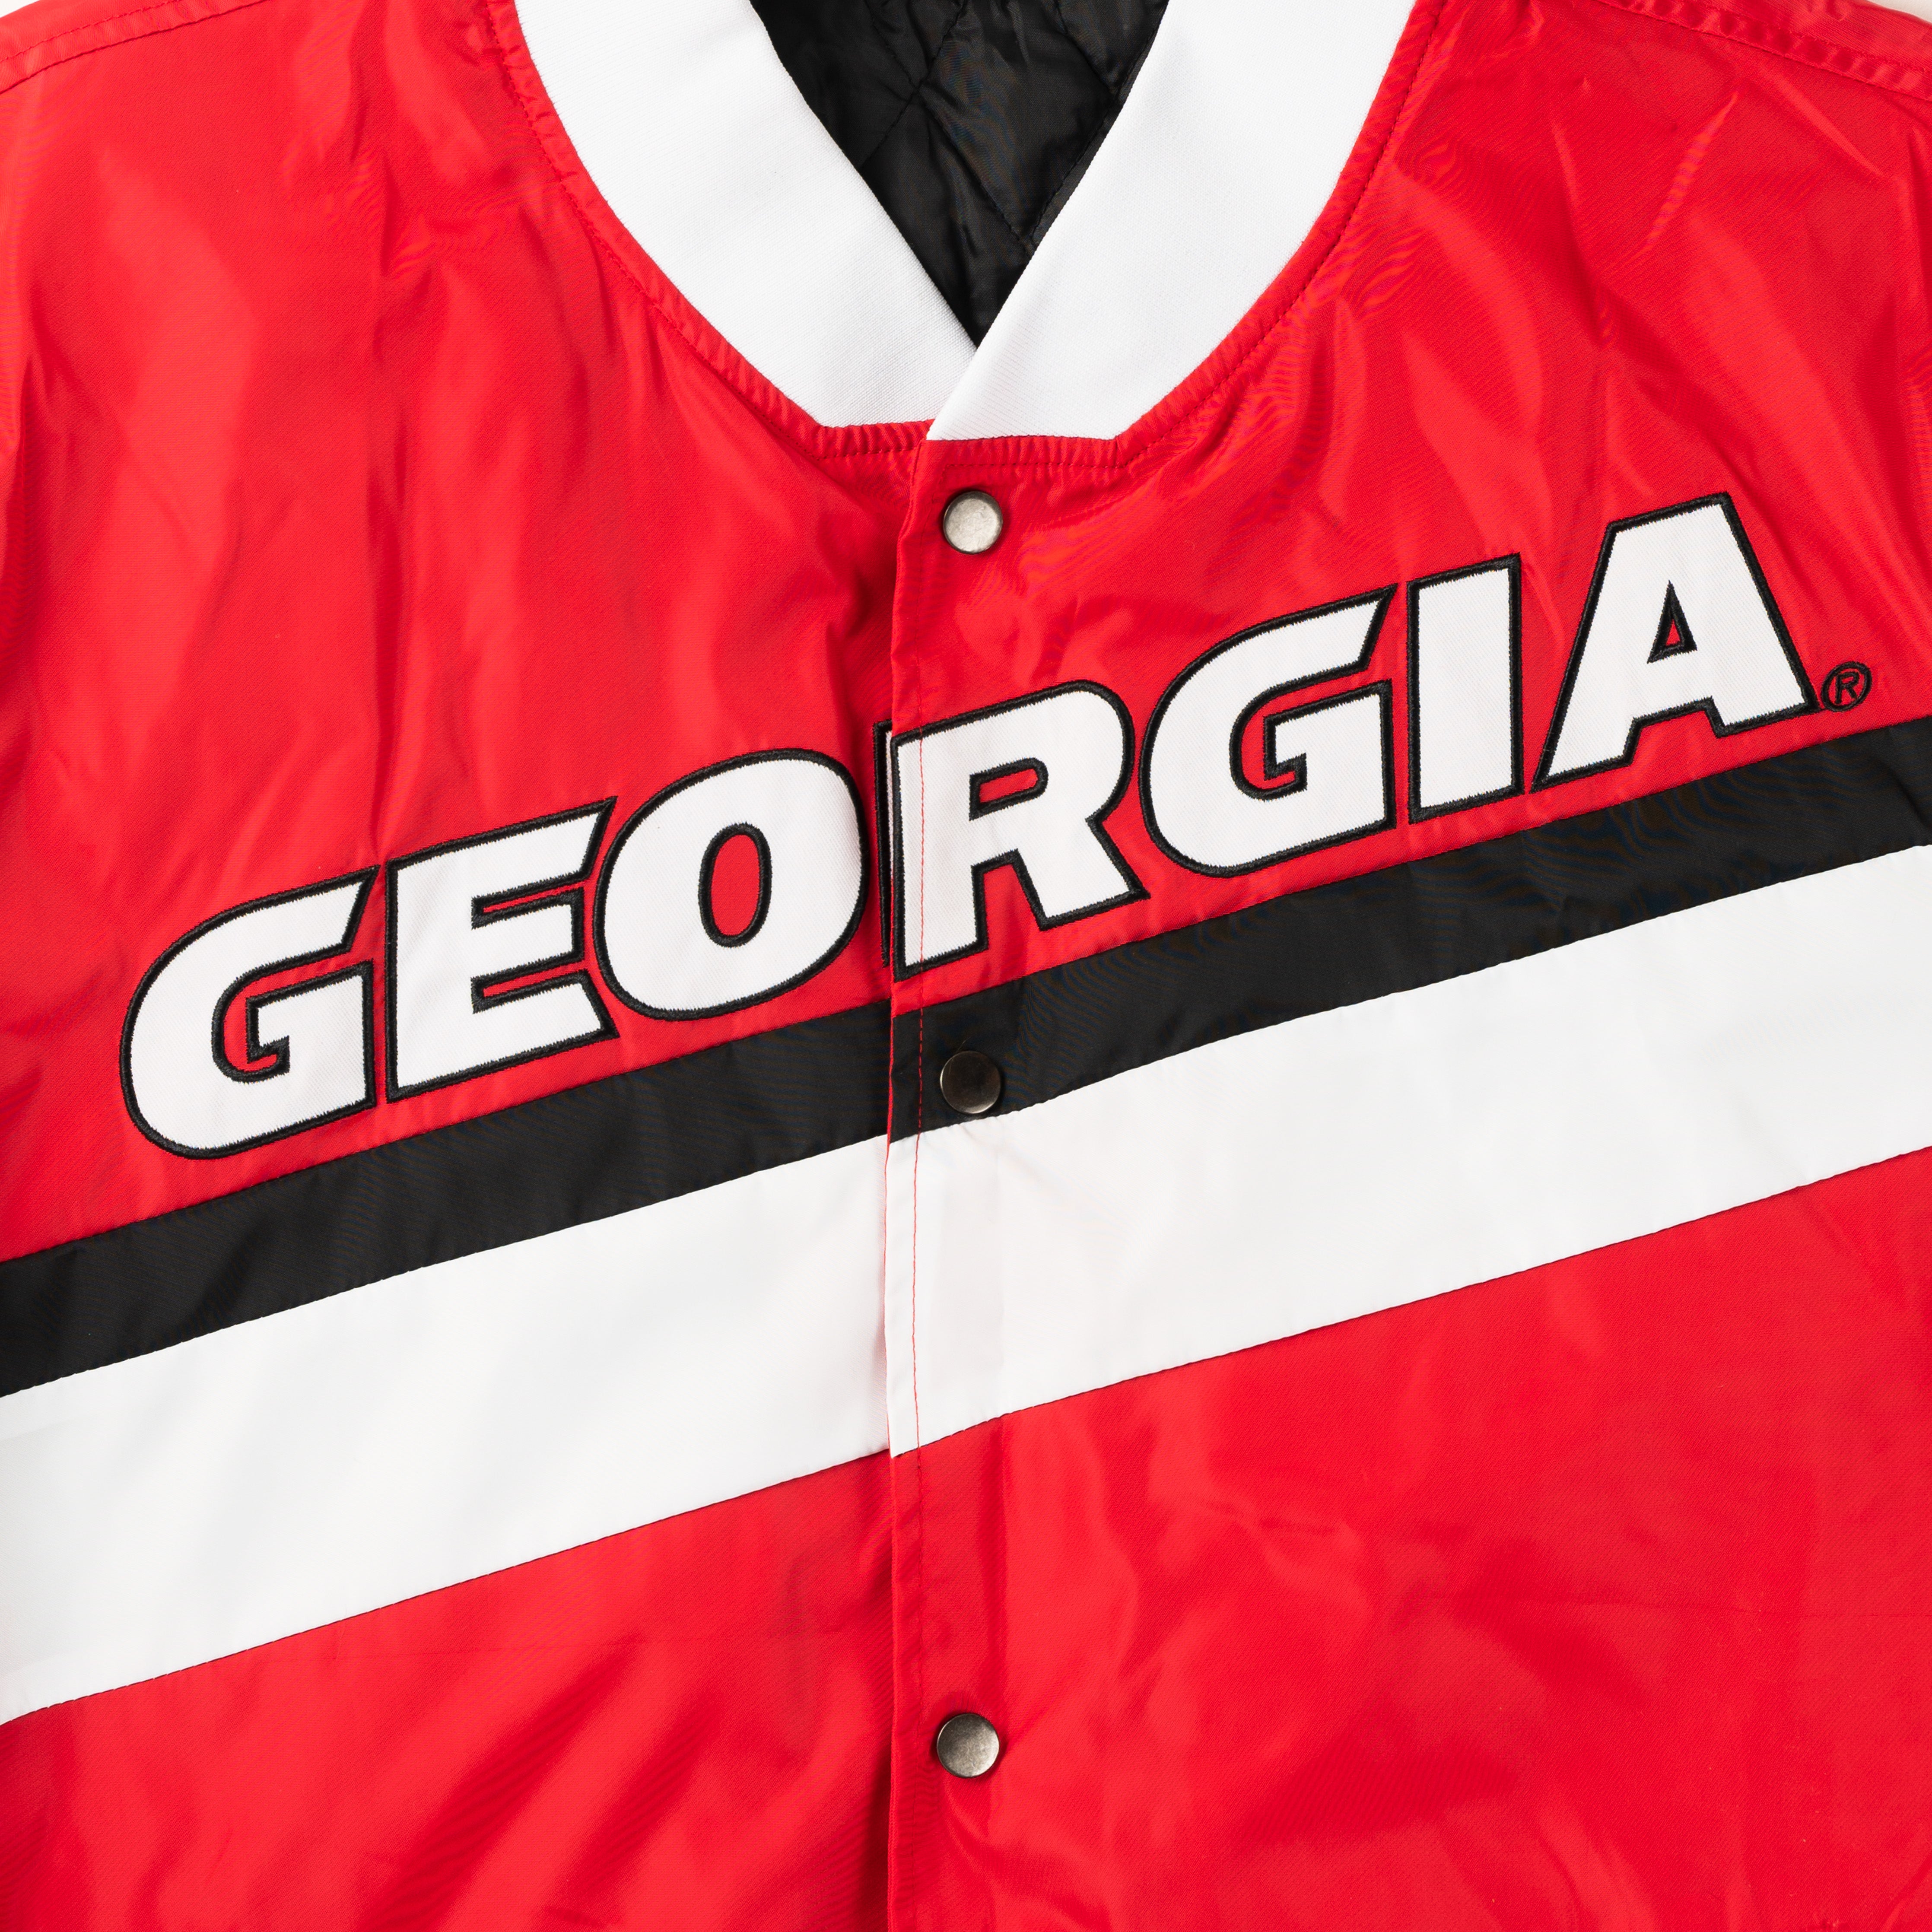 Georgia Bulldogs Men's Championship Jacket